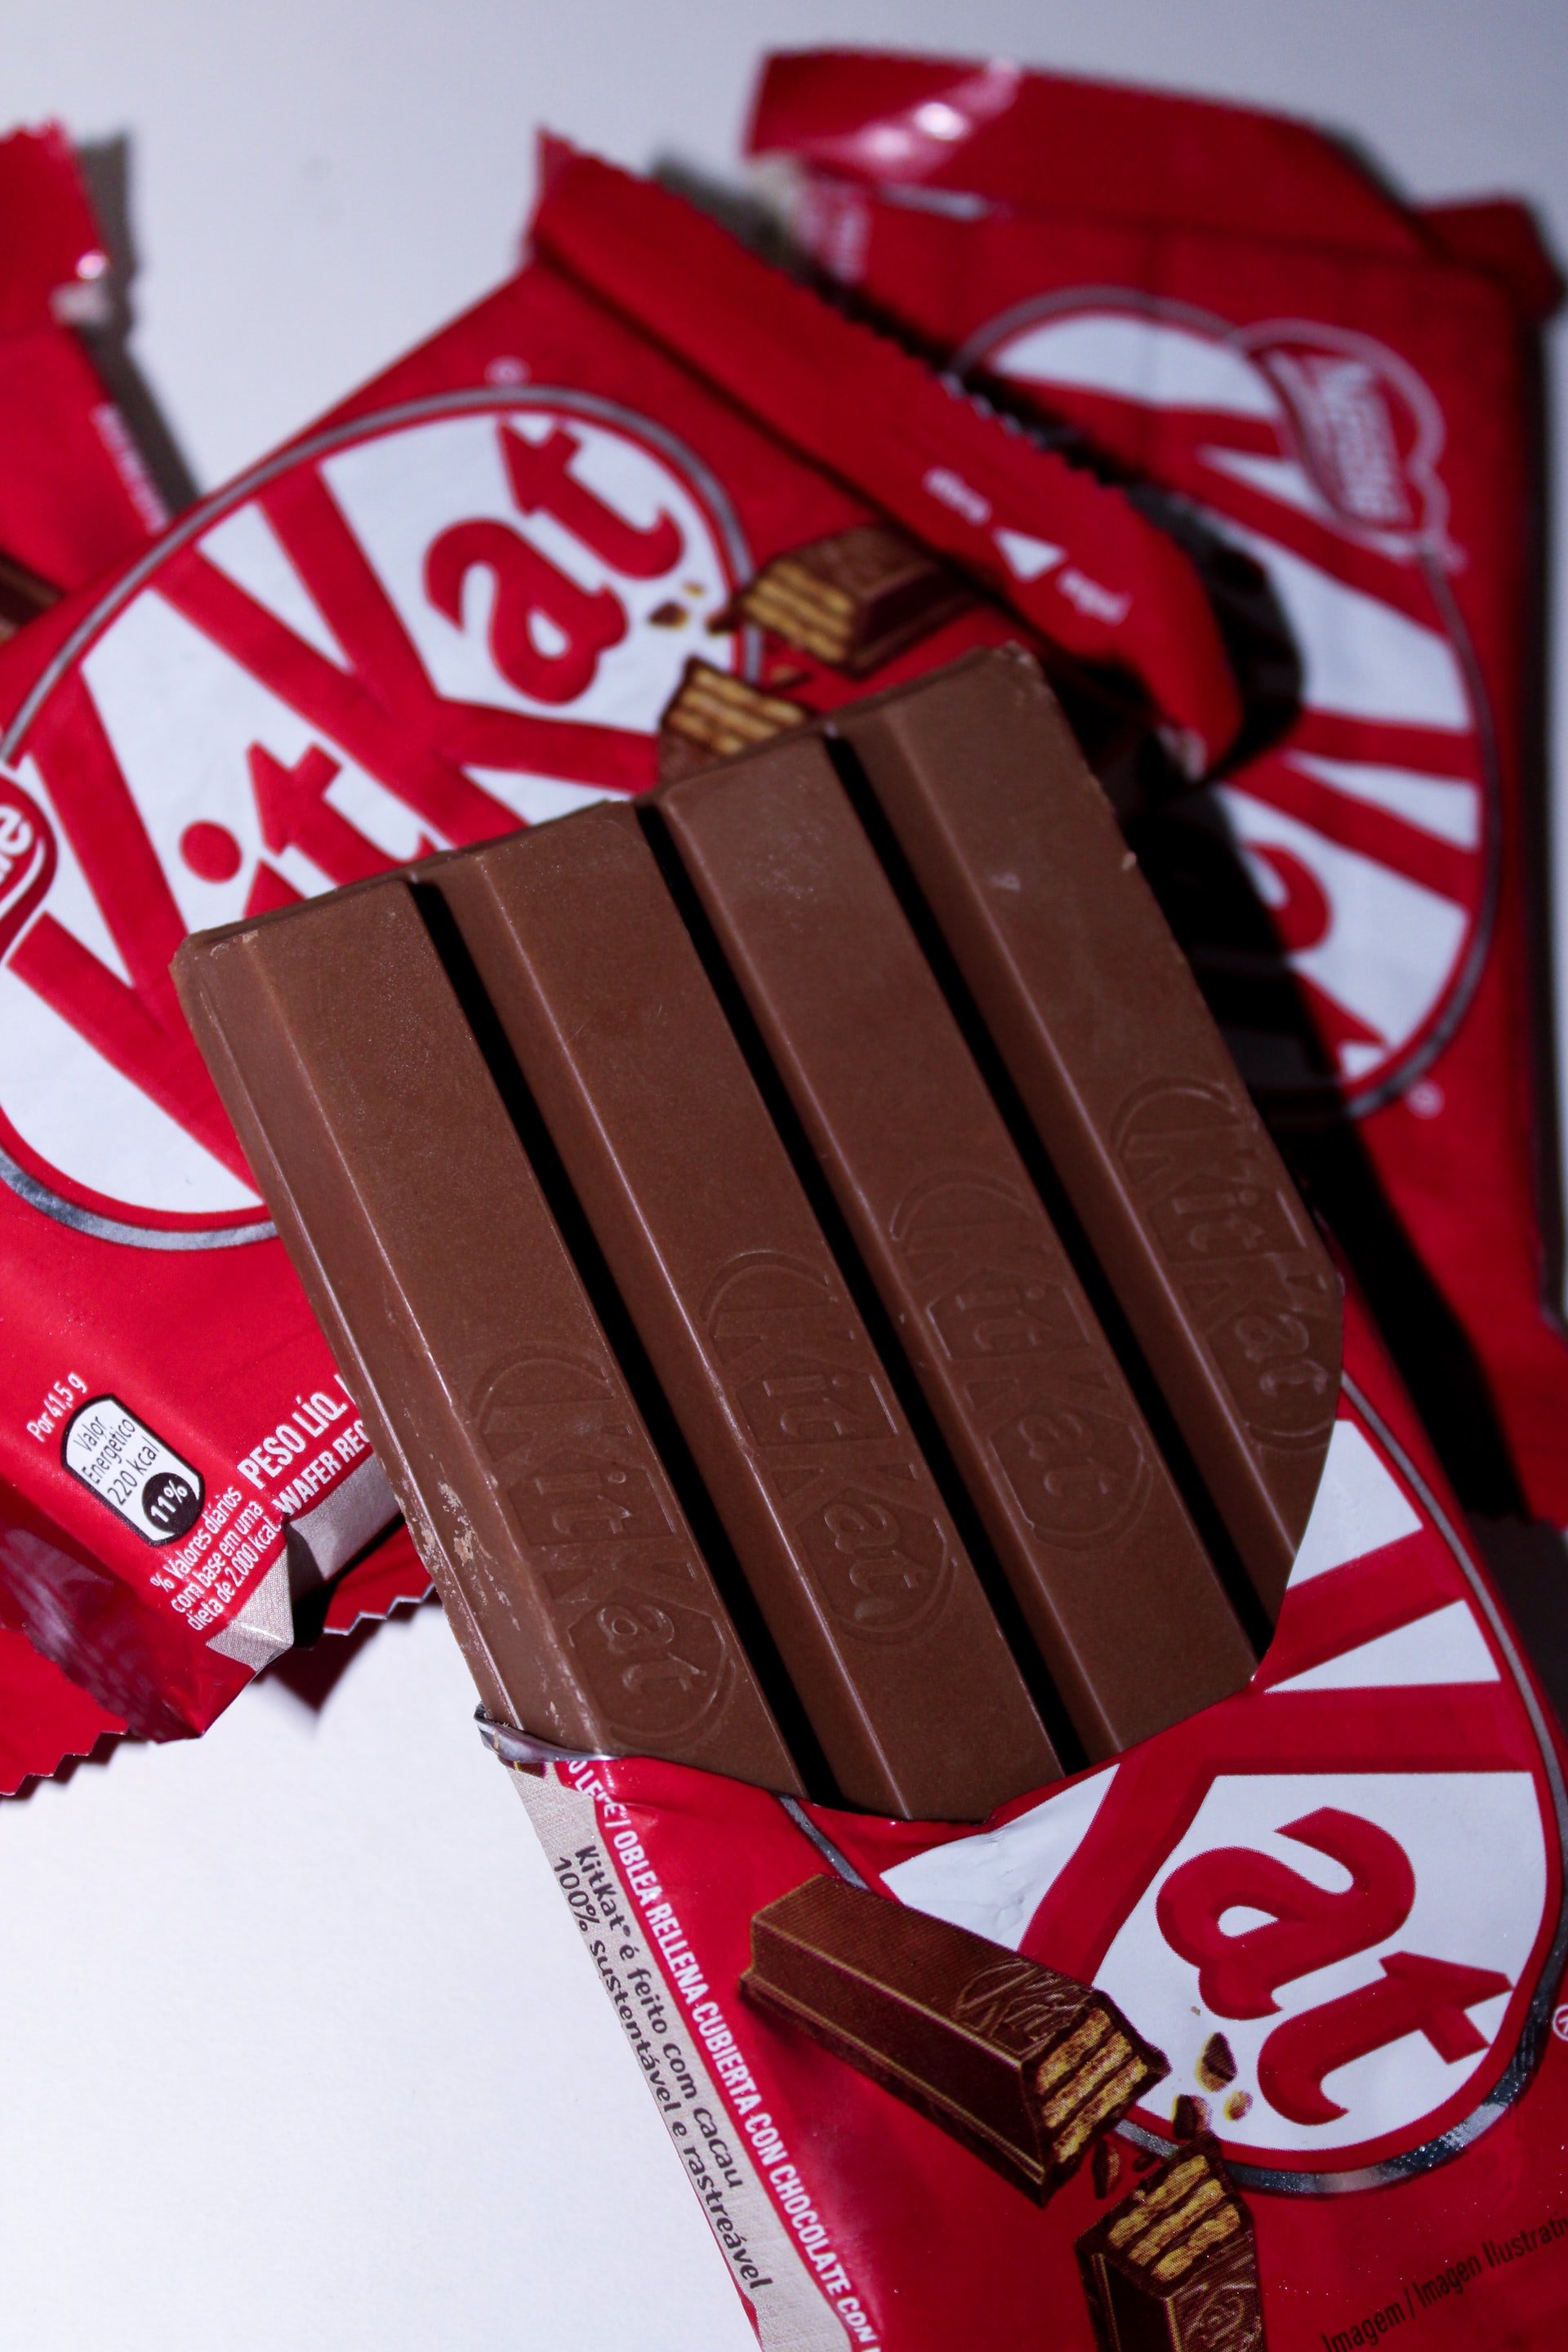 Kitkat chocolate bar | Source: Unsplash